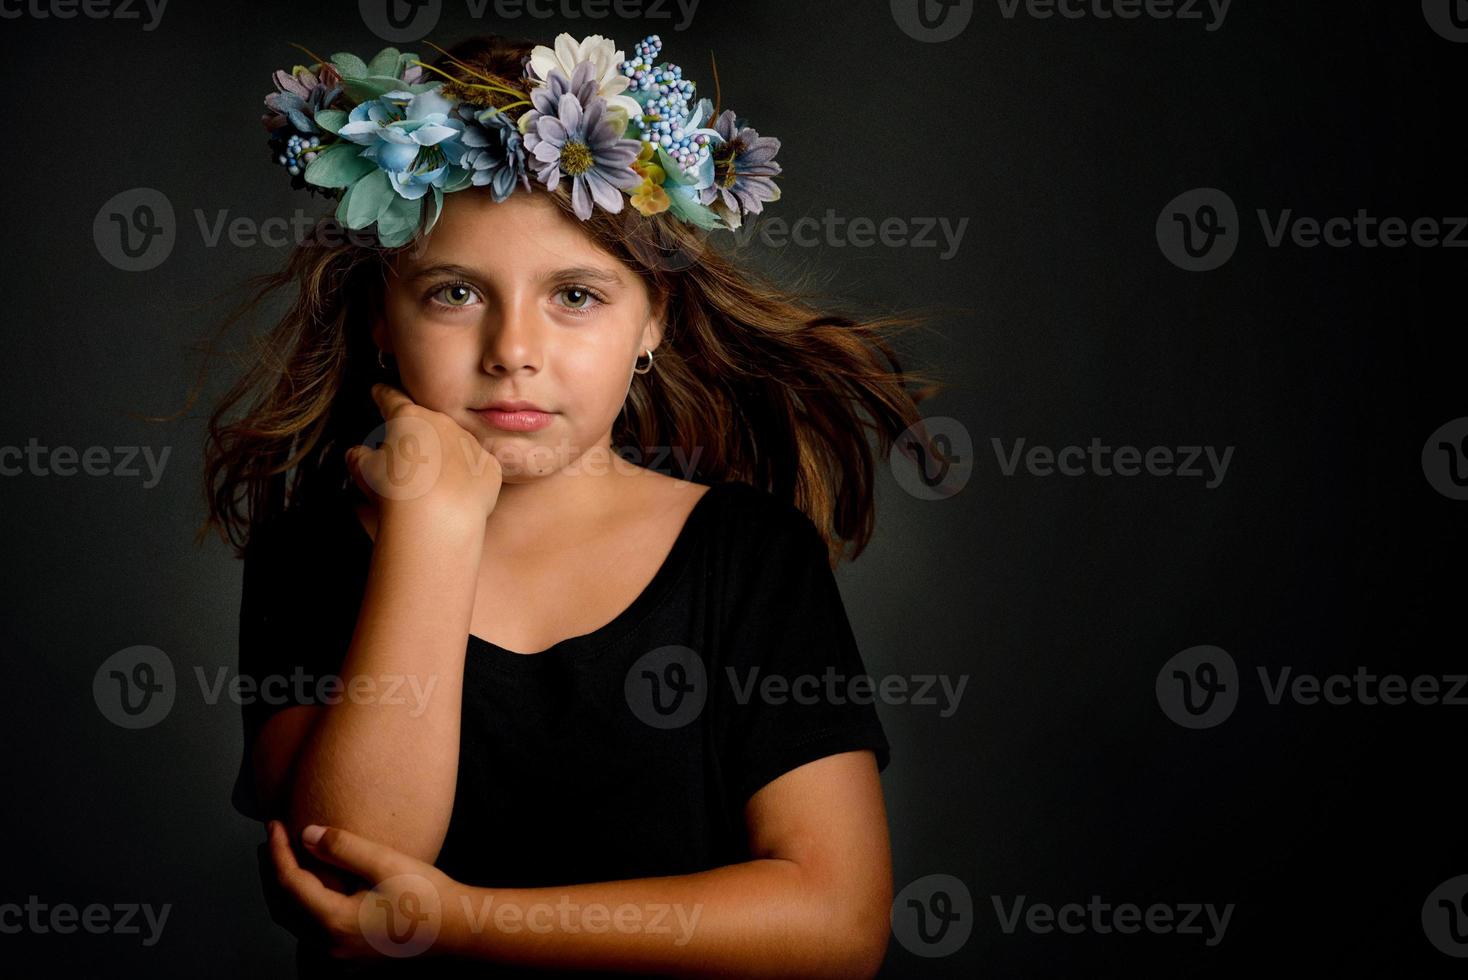 Cute little girl with flower wreath photo